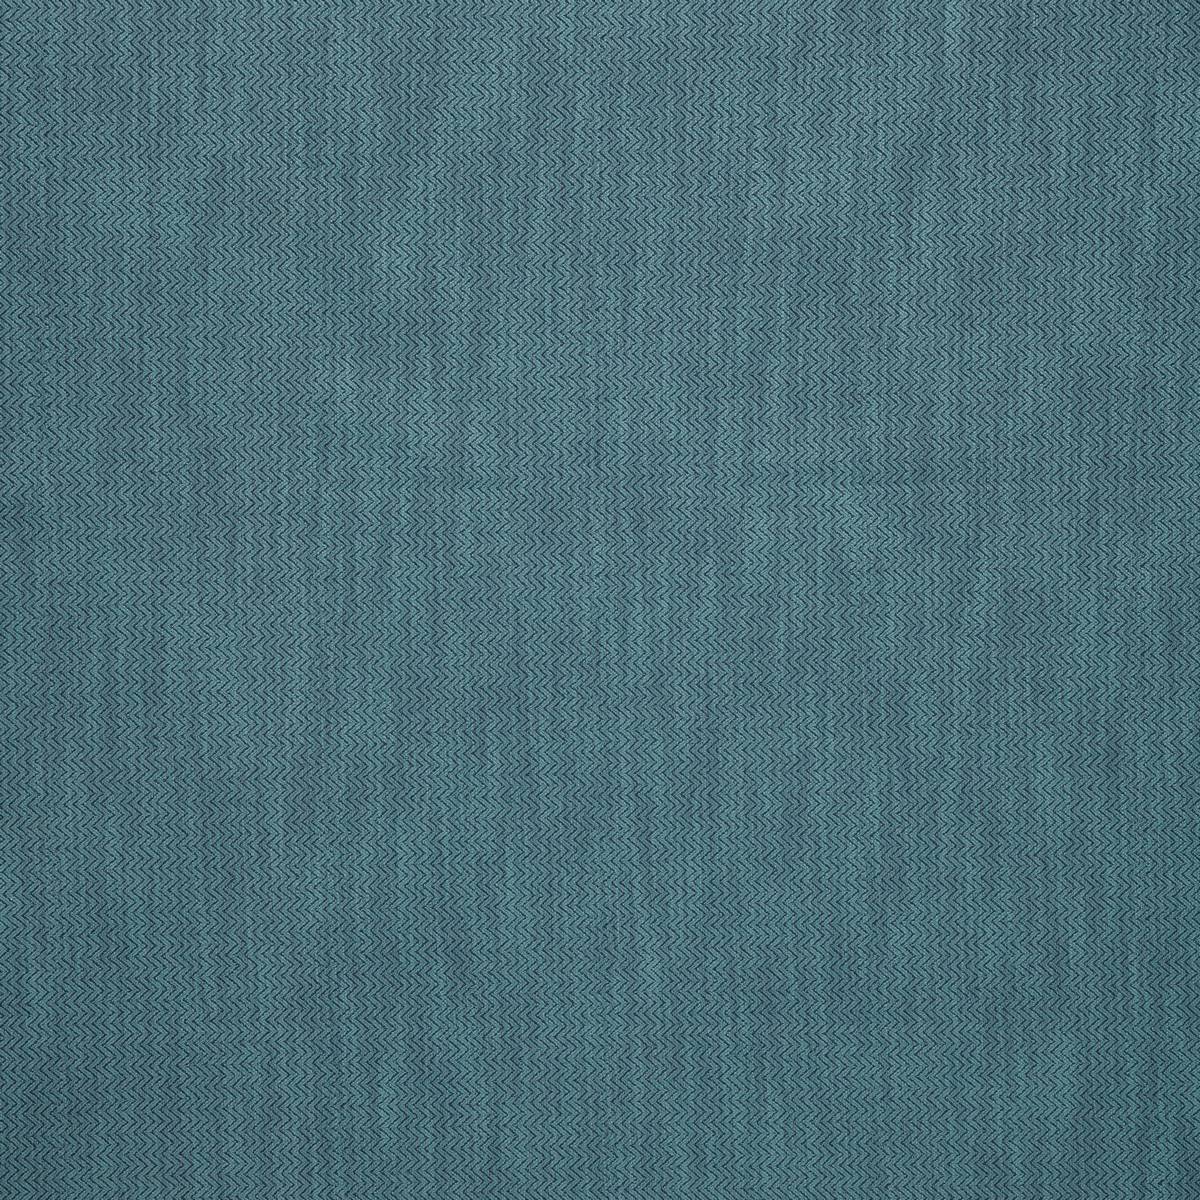 Bowmore Ocean Fabric by iLiv